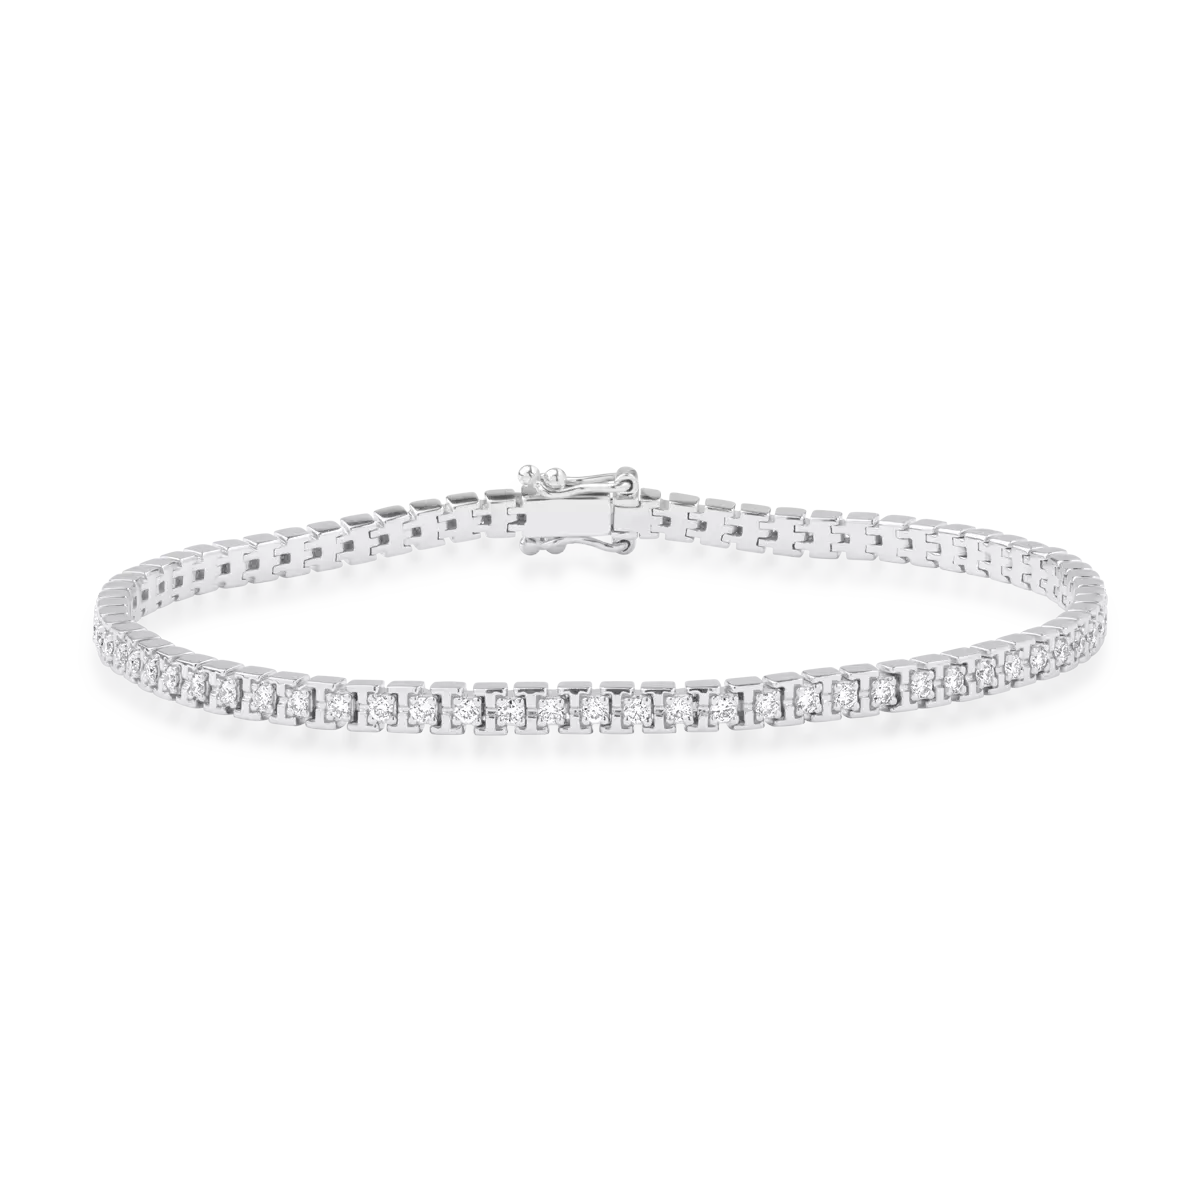 18K white gold tennis bracelet with 1.05ct diamonds